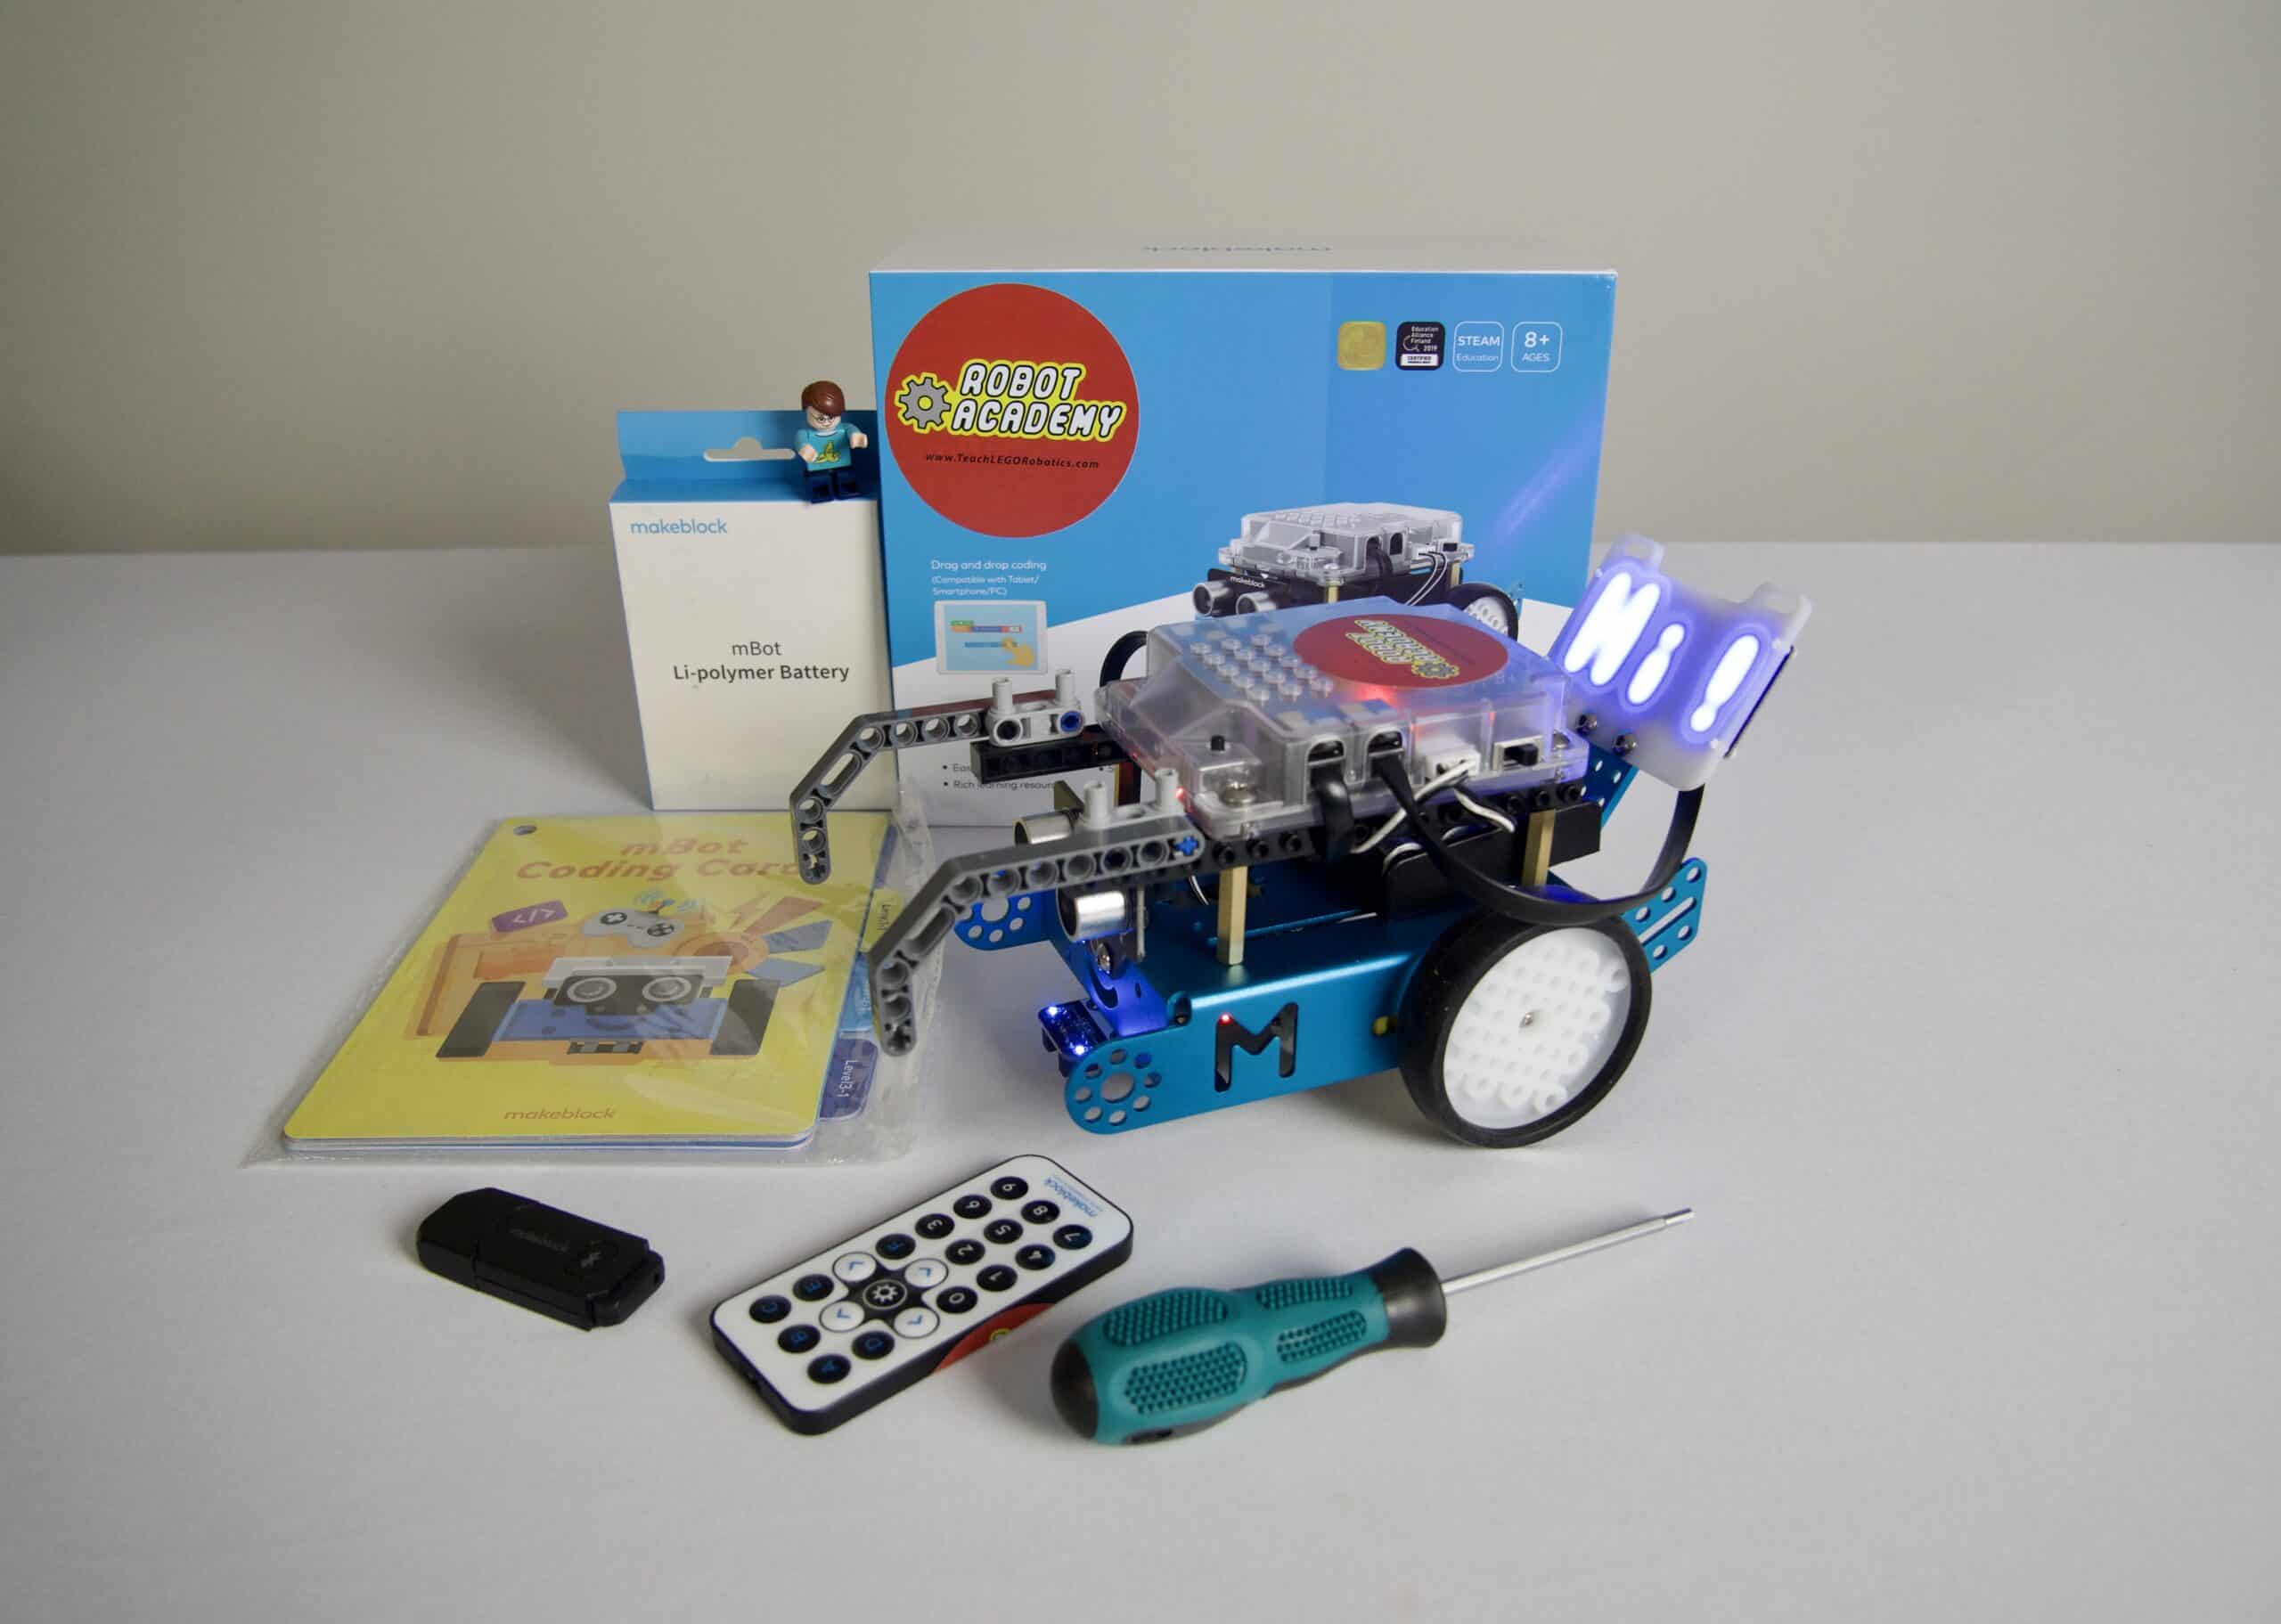 Deluxe Bundle: Robot Academy Arduino LEGO® Robot with Instructional Video